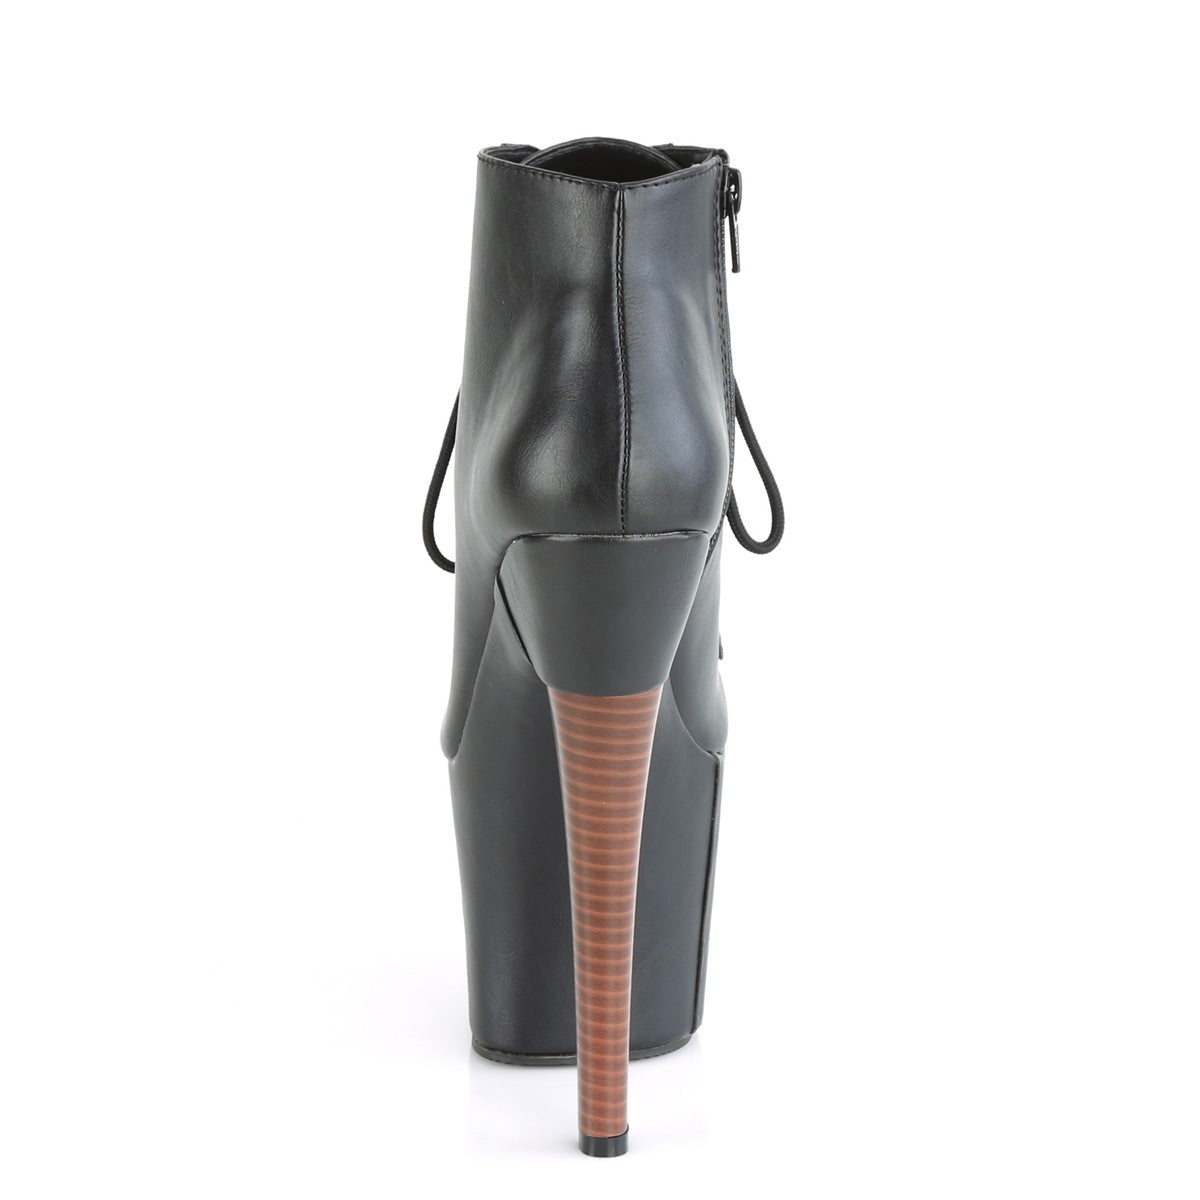 RADIANT-1005 Pleaser Black Faux Leather/Black Faux Leather Platform Shoes [Sexy Ankle Boots]